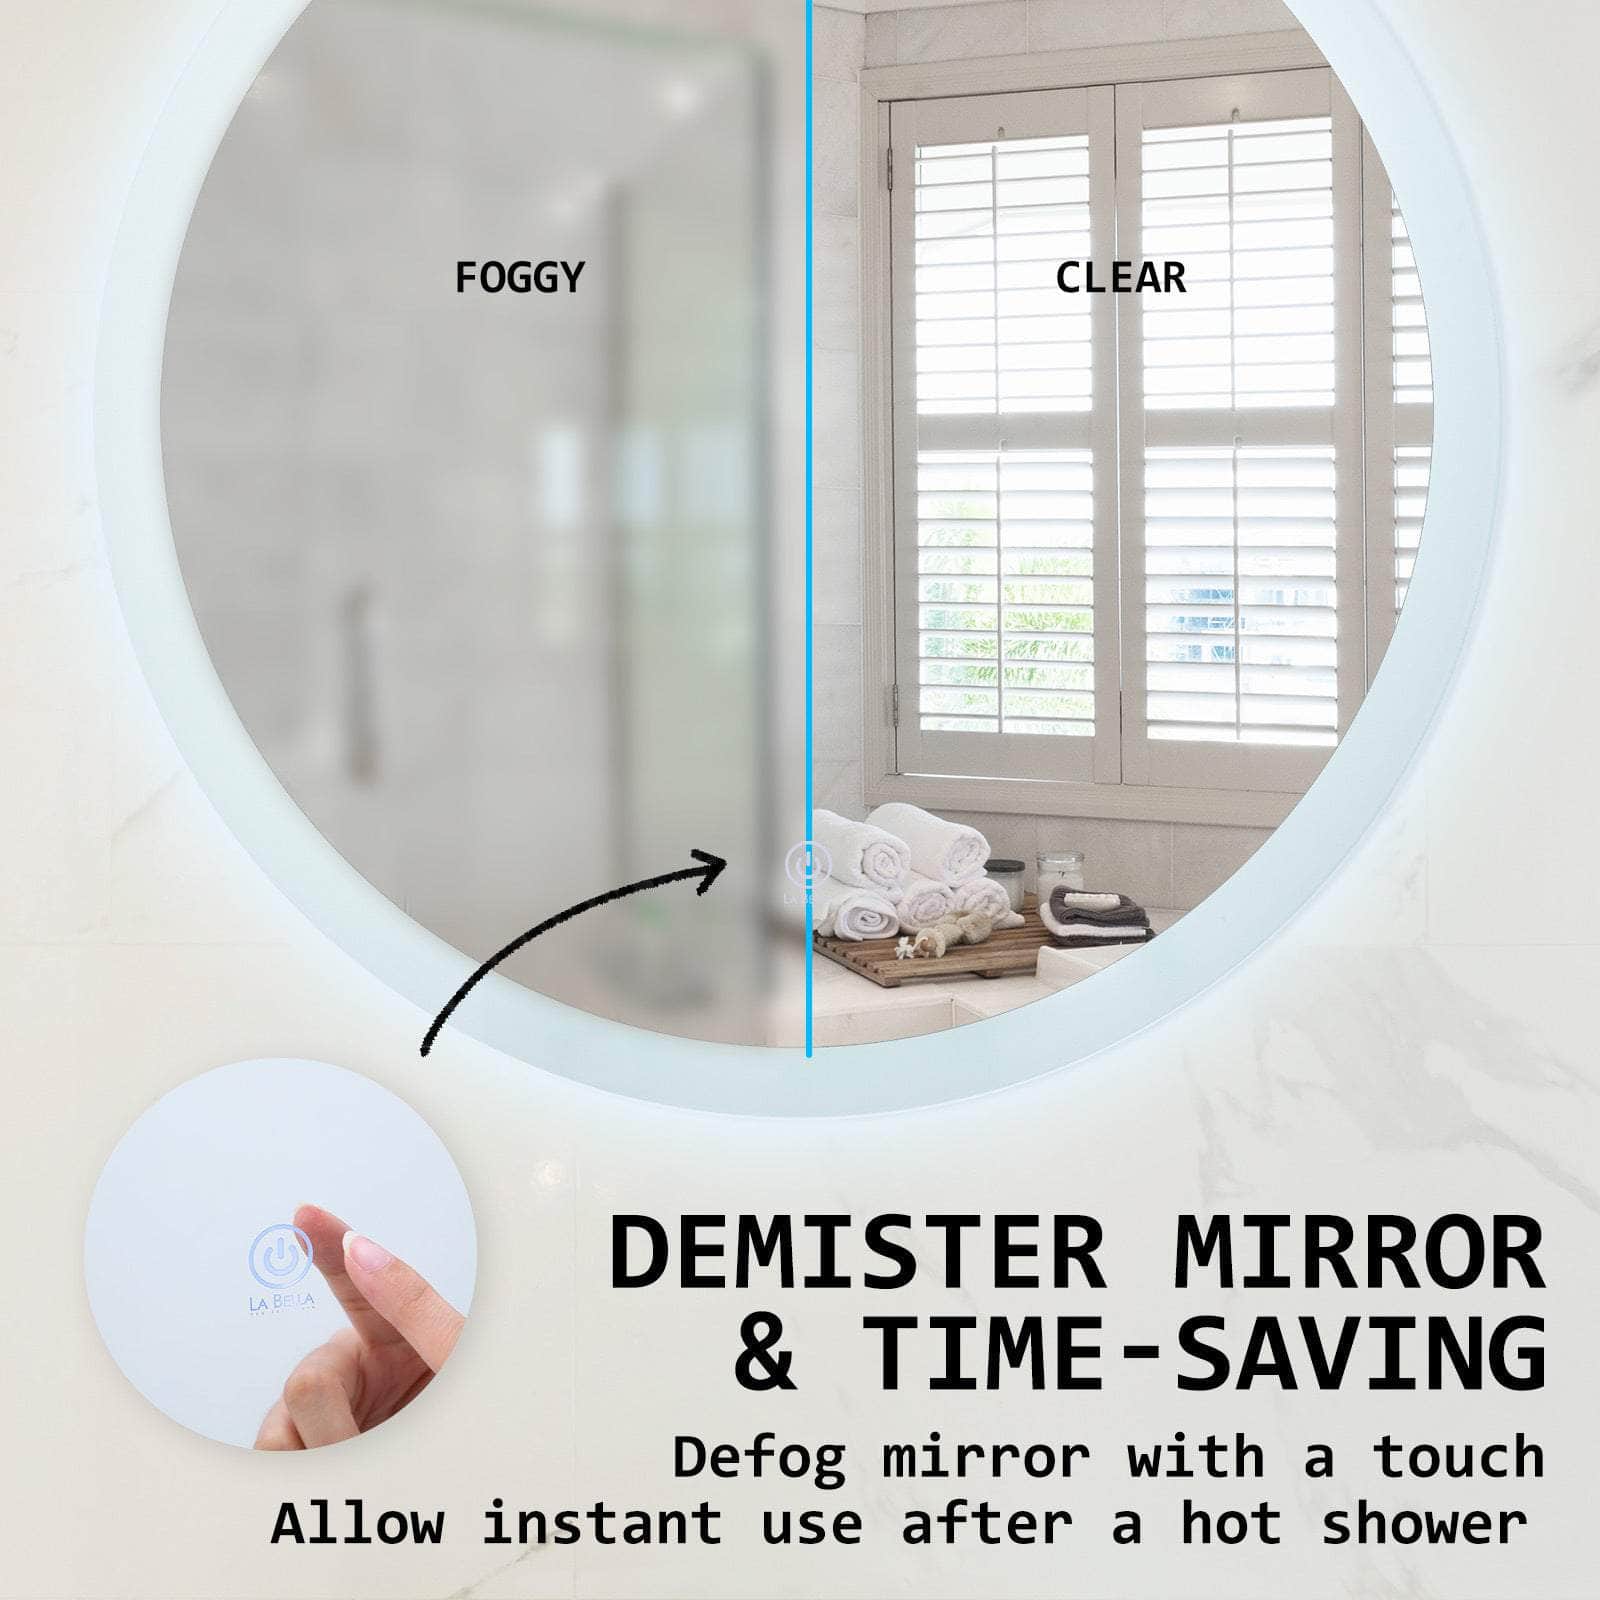 Led Wall Mirror Round Touch Anti-Fog Makeup Decor Bathroom Vanity 60Cm